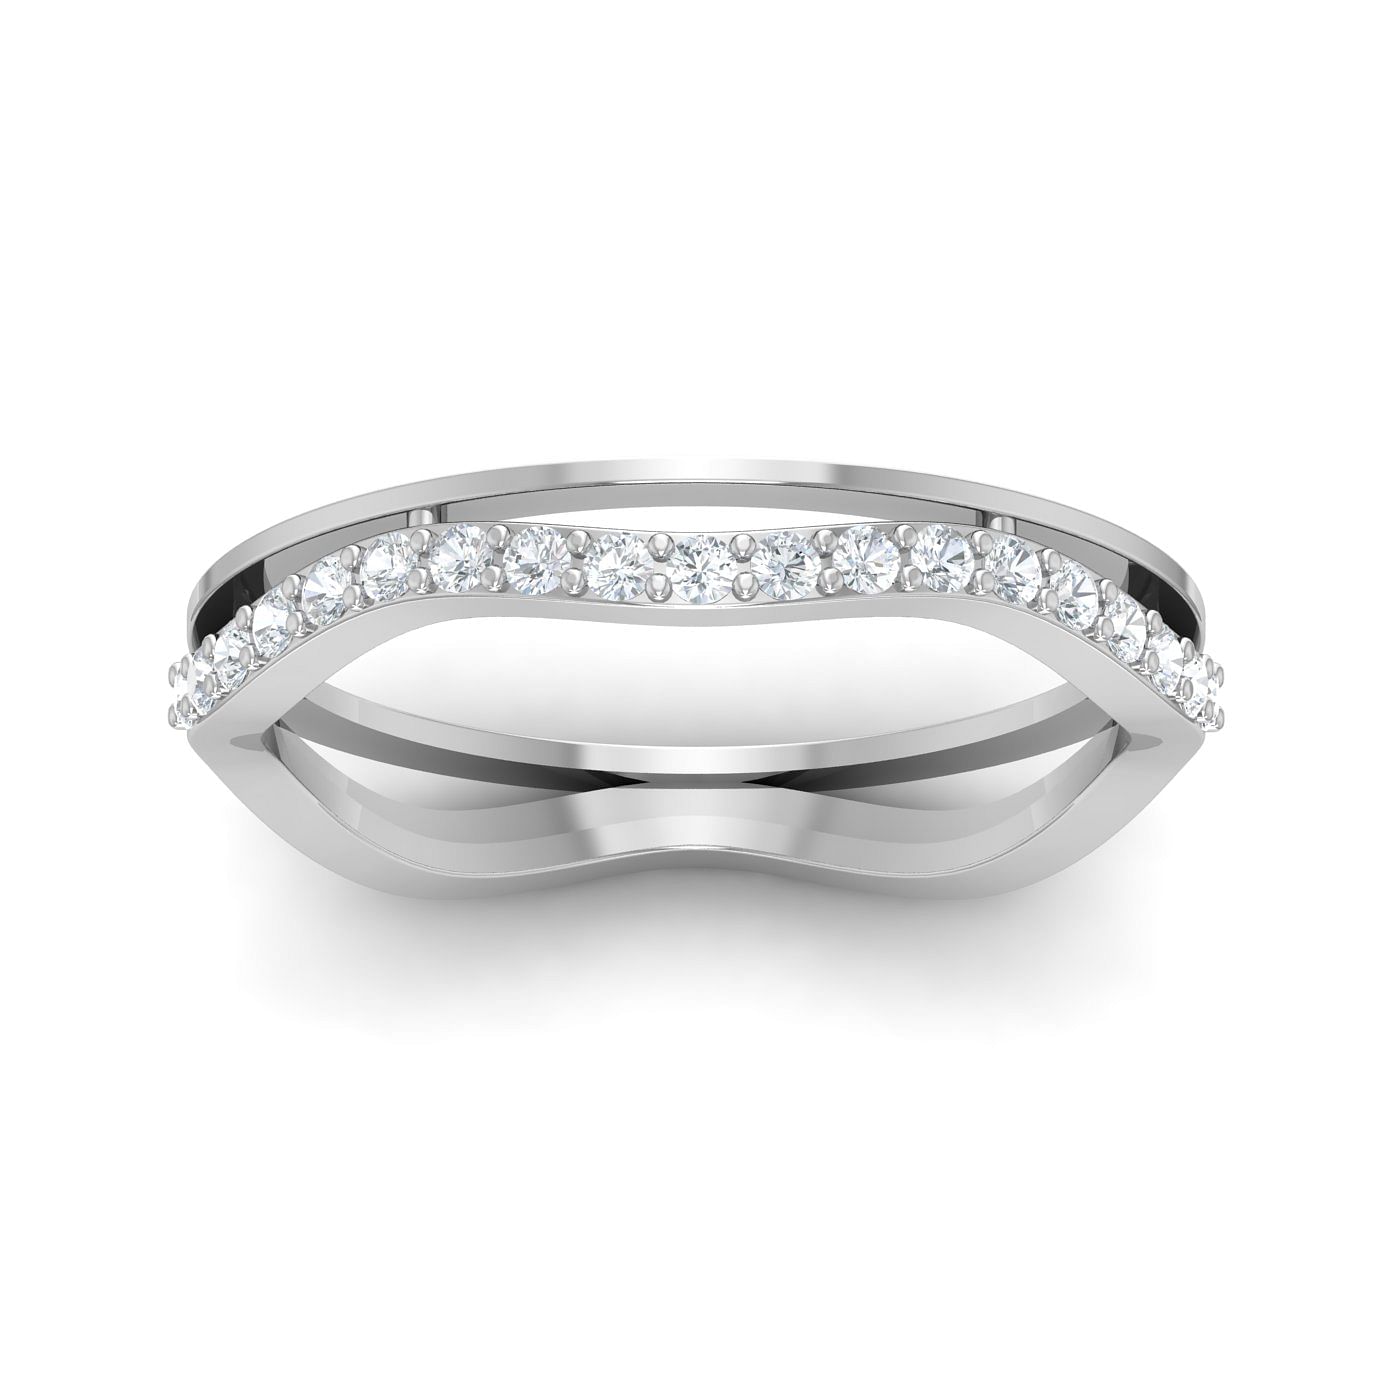 Round Waves White Gold Diamond Ring For Women